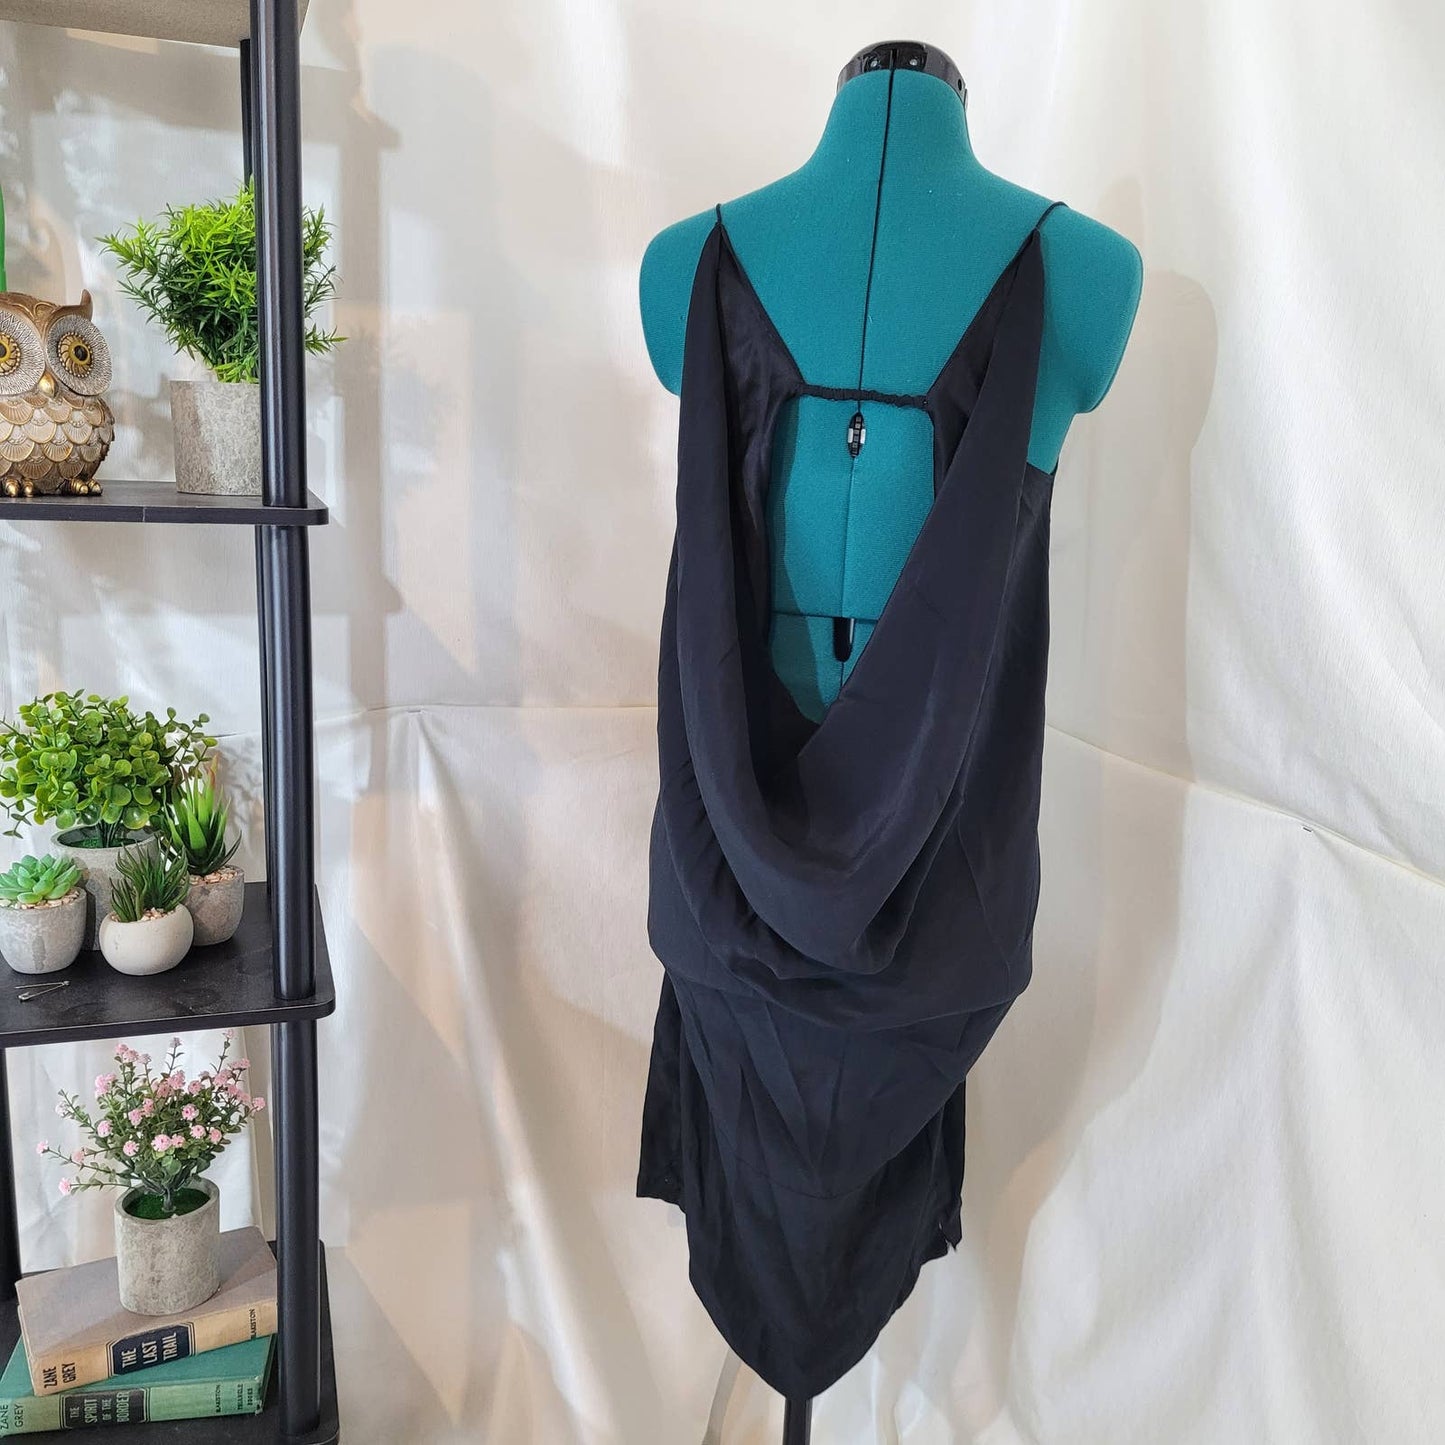 Very by Vero Moda Black Silk Backless Slip Dress - Size SmallMarkita's ClosetVERO MODA